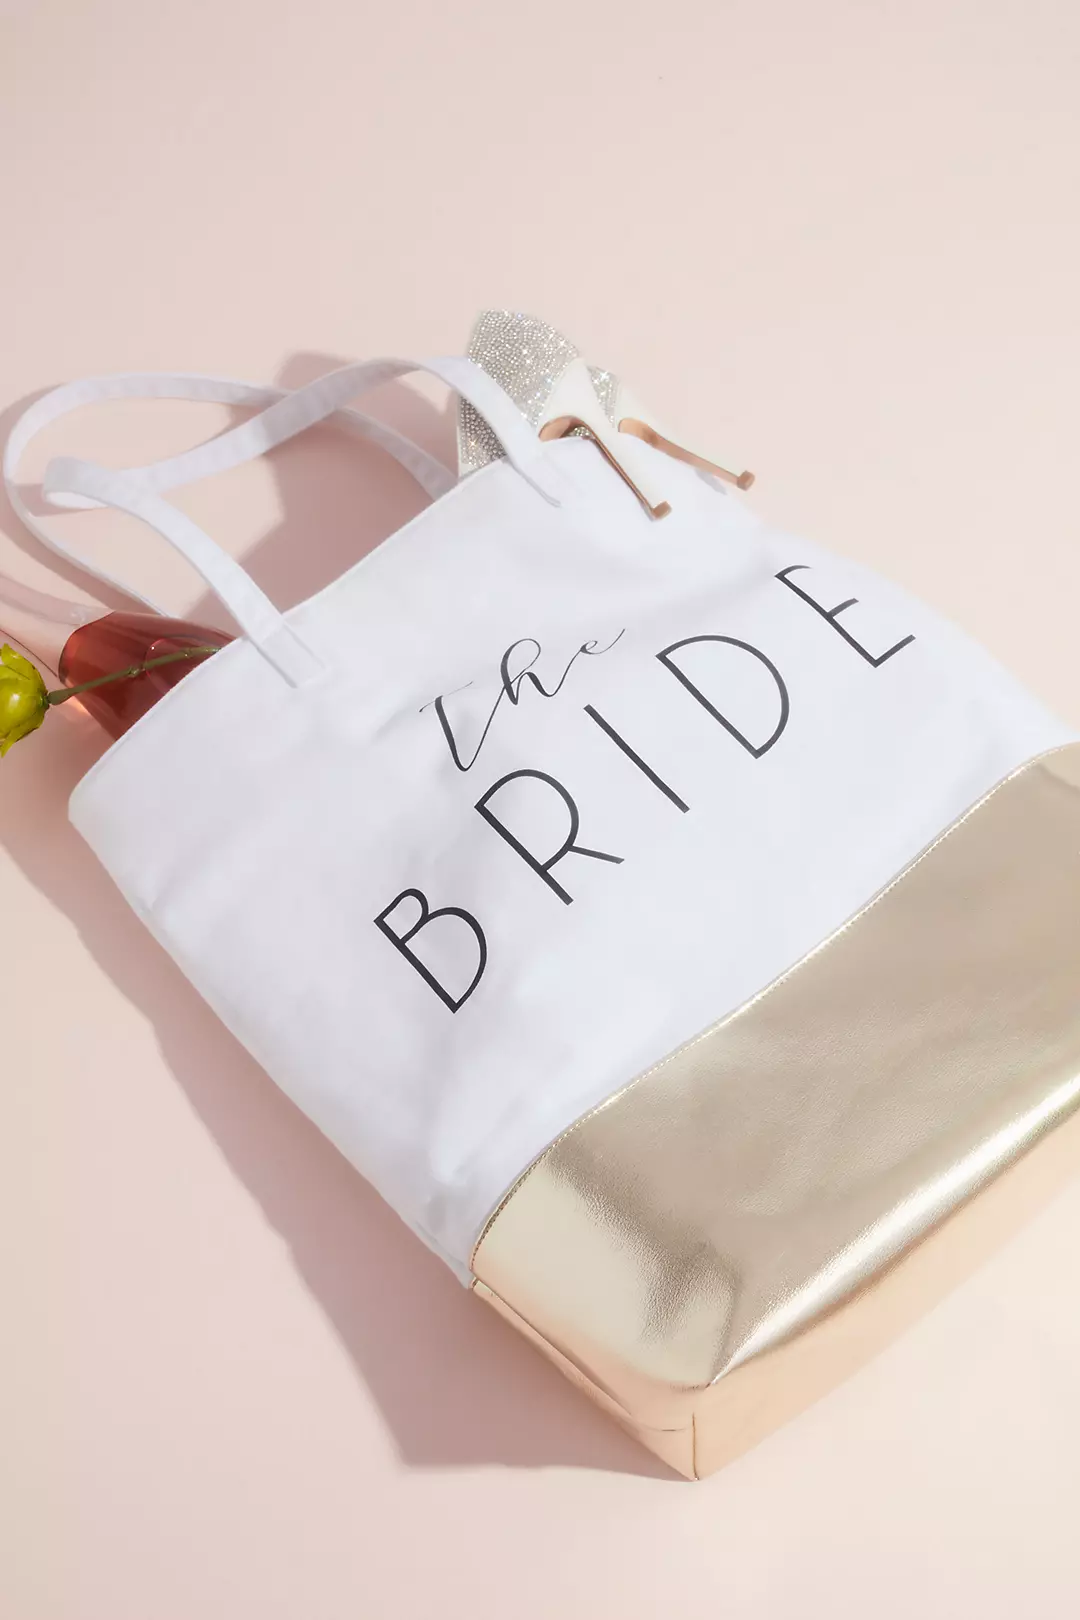 The Bride Tote Bag - Wedding Tote - Bride to be Gift - Bridal